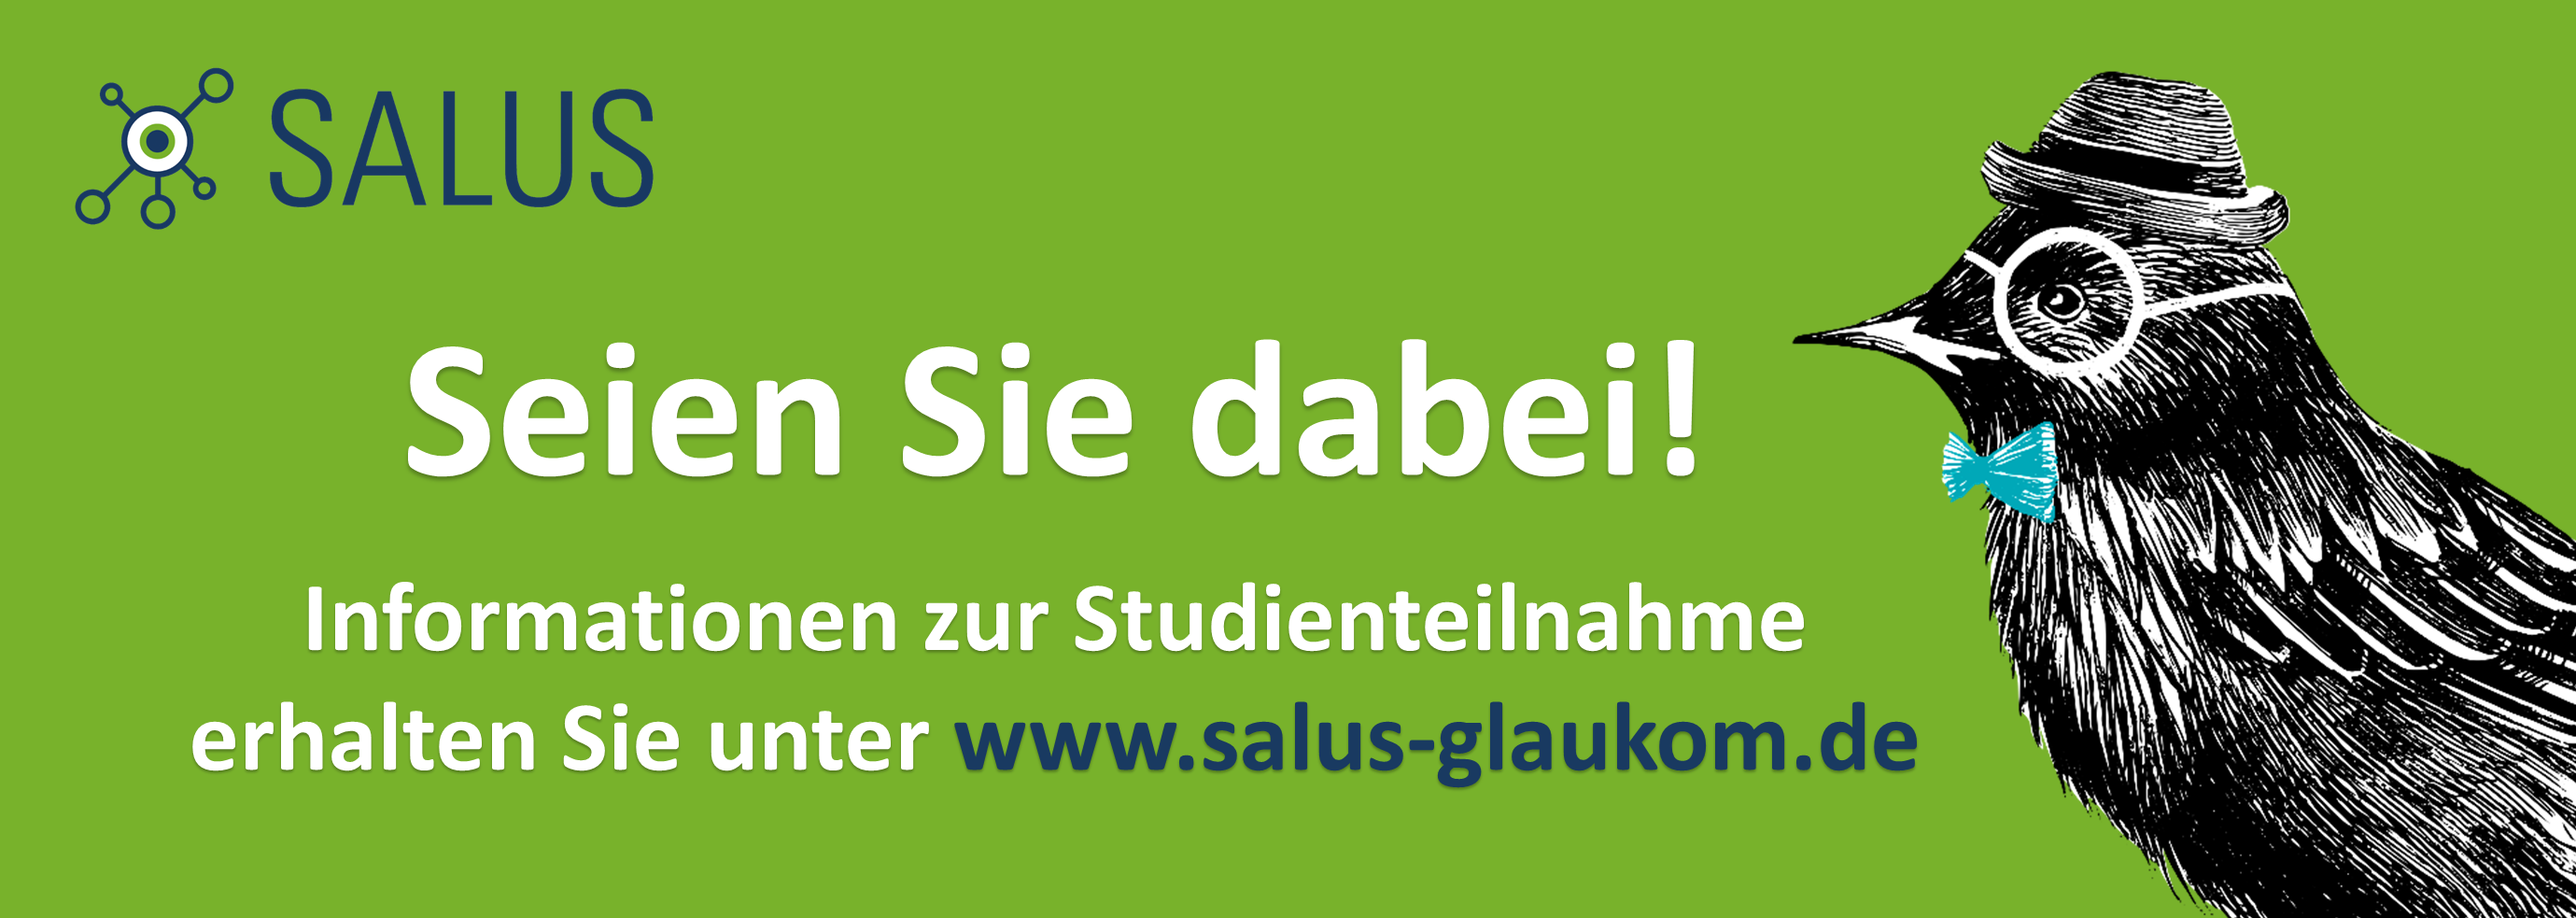 Banner Glaukom-Studie Salus